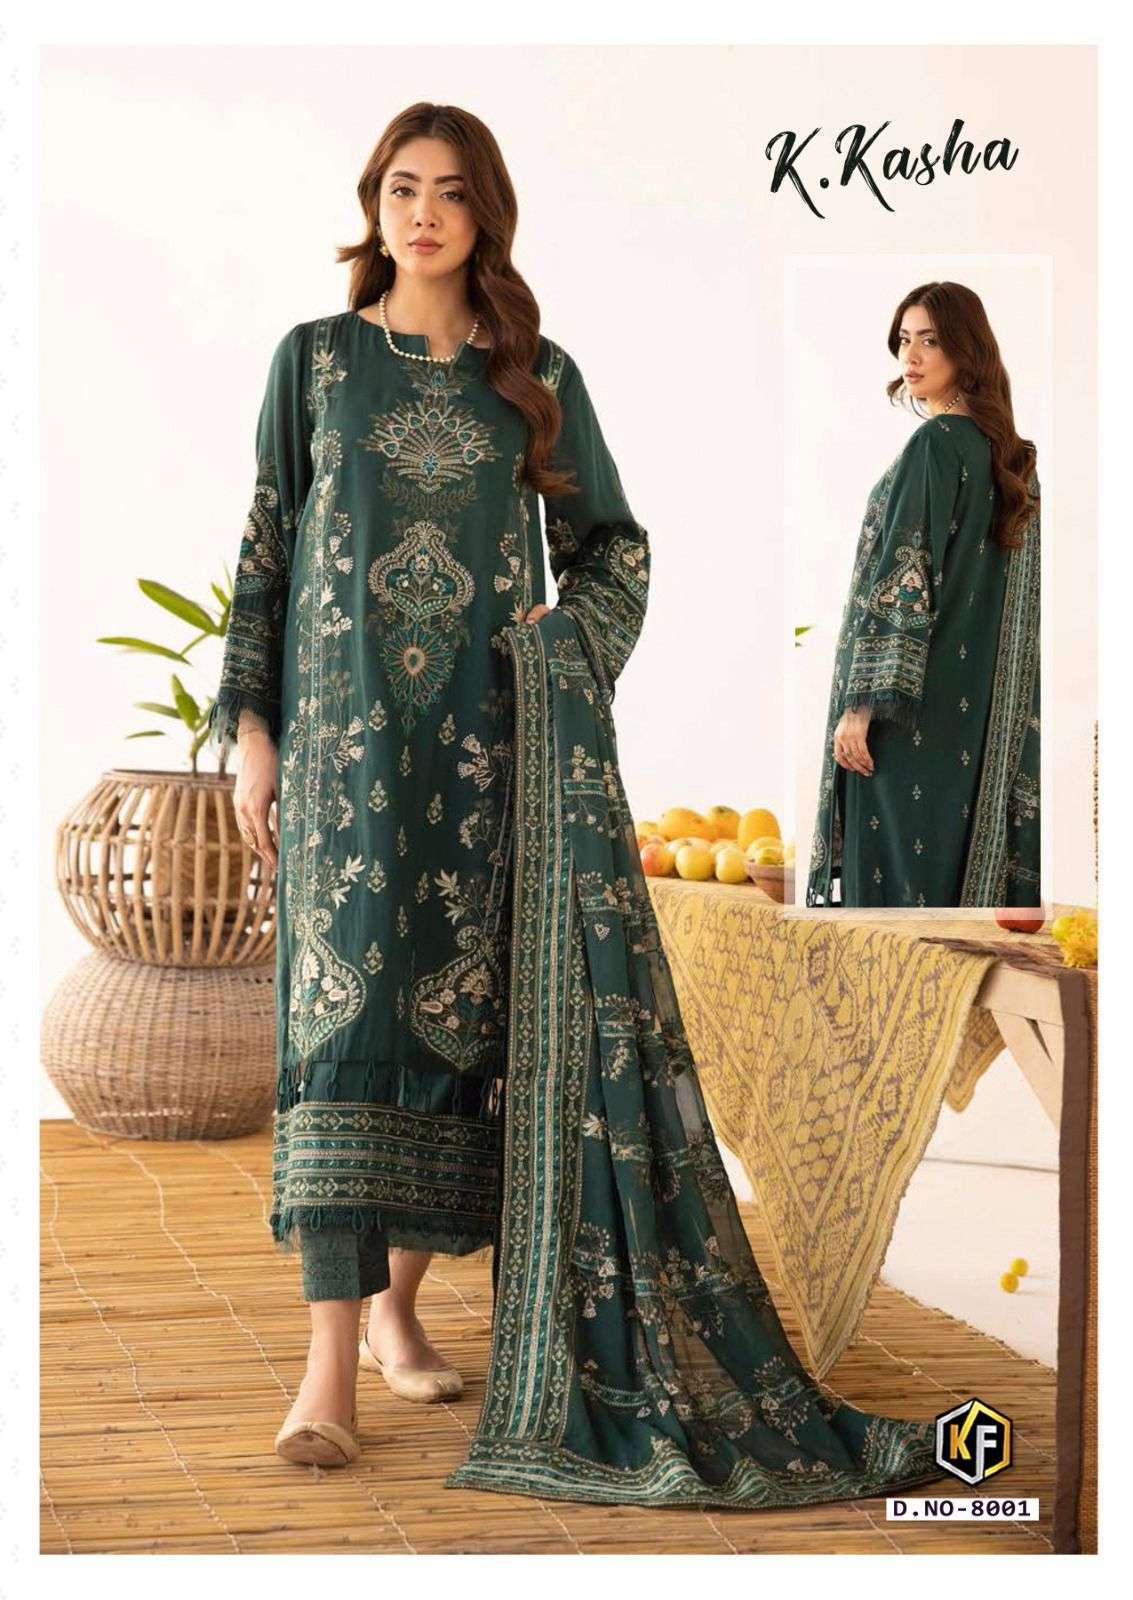 Keval K Kasha Vol 8 Dress Material for retail shop in Surat